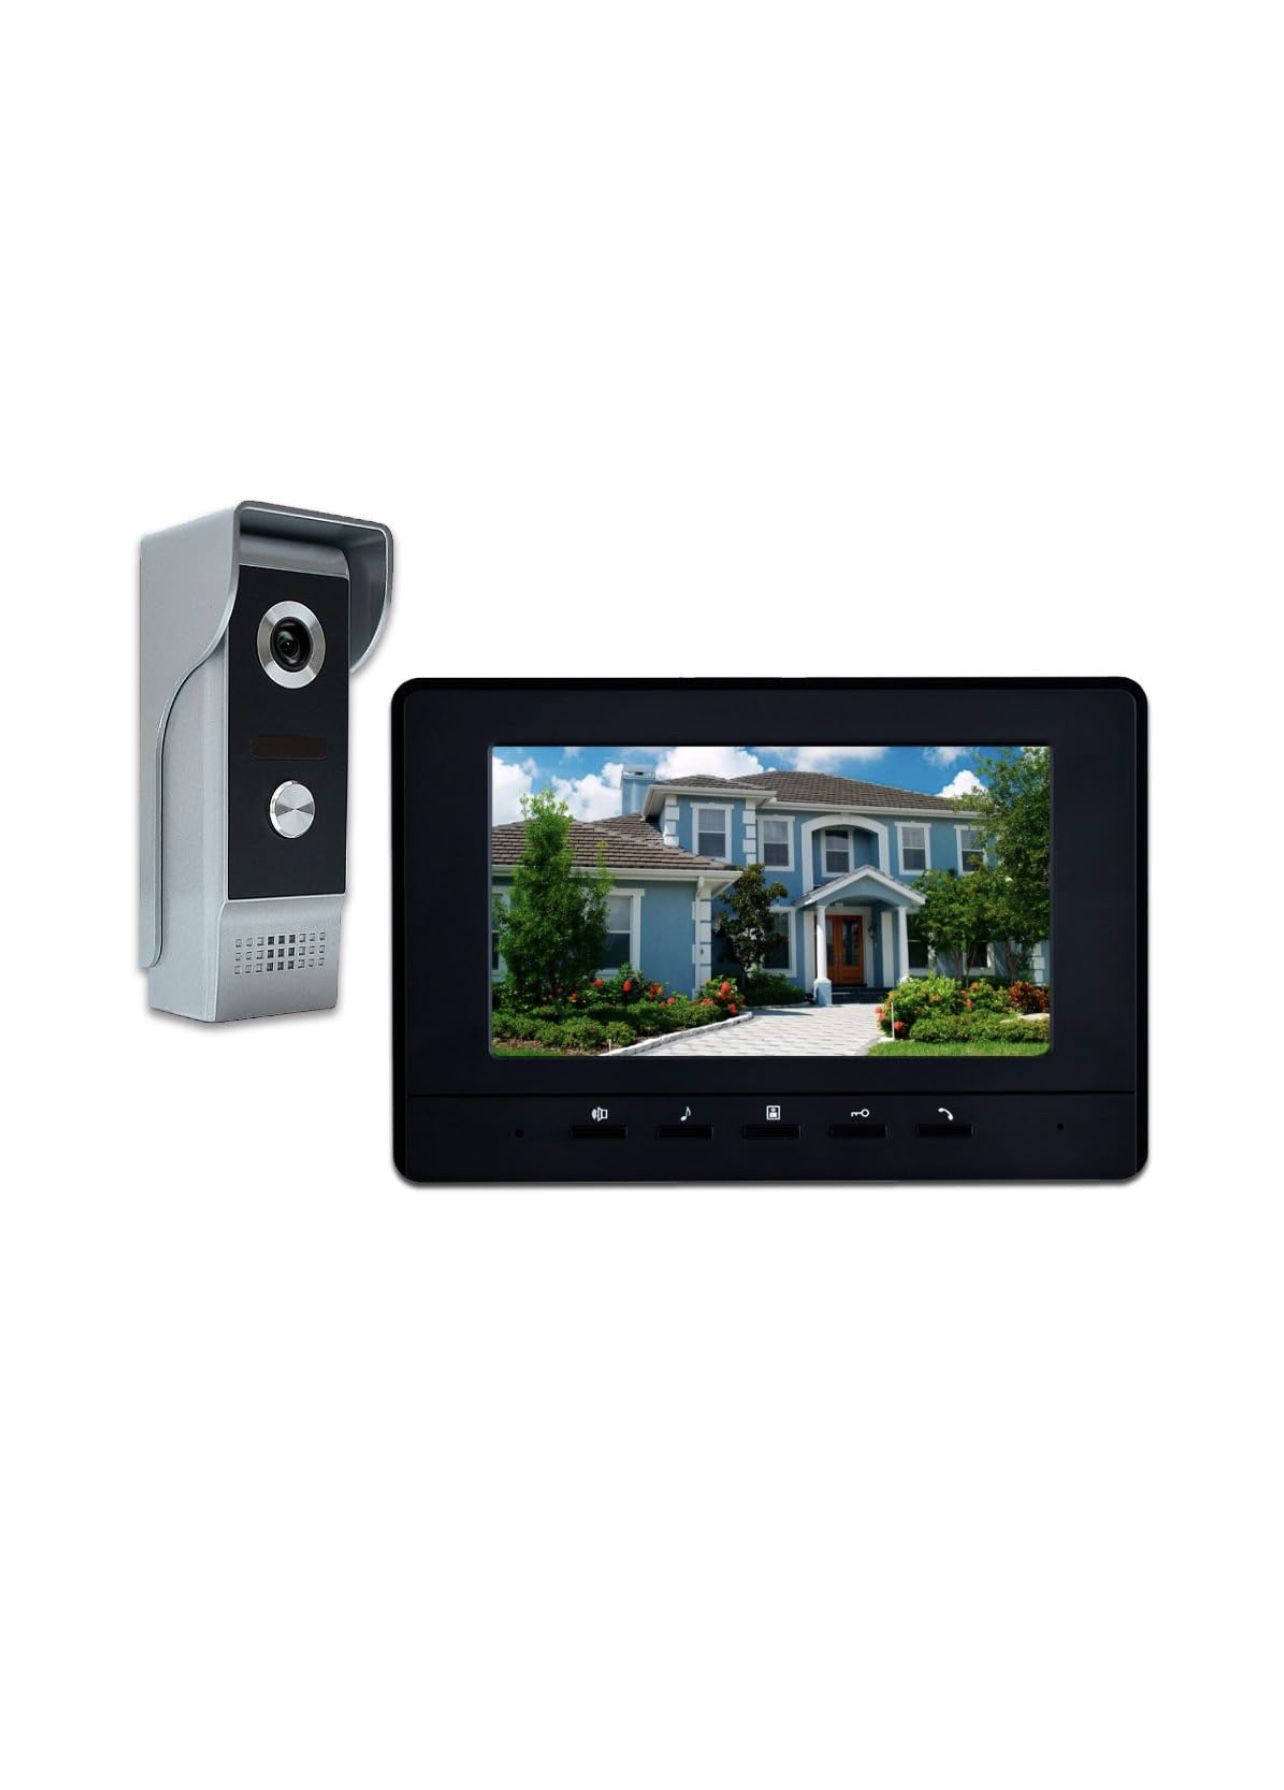 Video Doorbell System (New In Box) for Sale in Virginia Beach, VA OfferUp